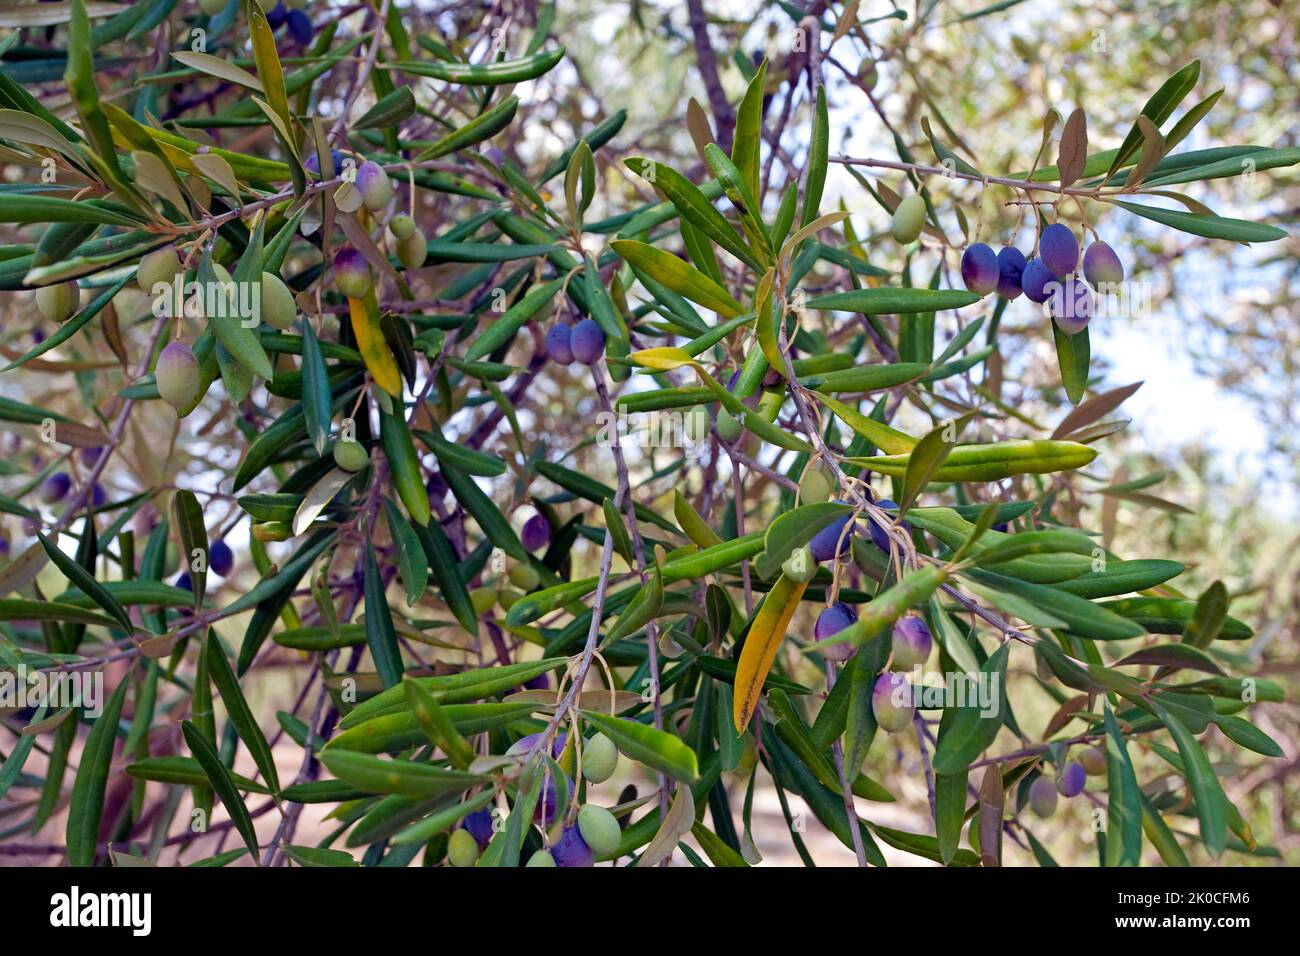 Old Olive tree (Olea europaea) with ripe olives at Limni Keriou, Zakynthos island, Greece, Europe Stock Photo